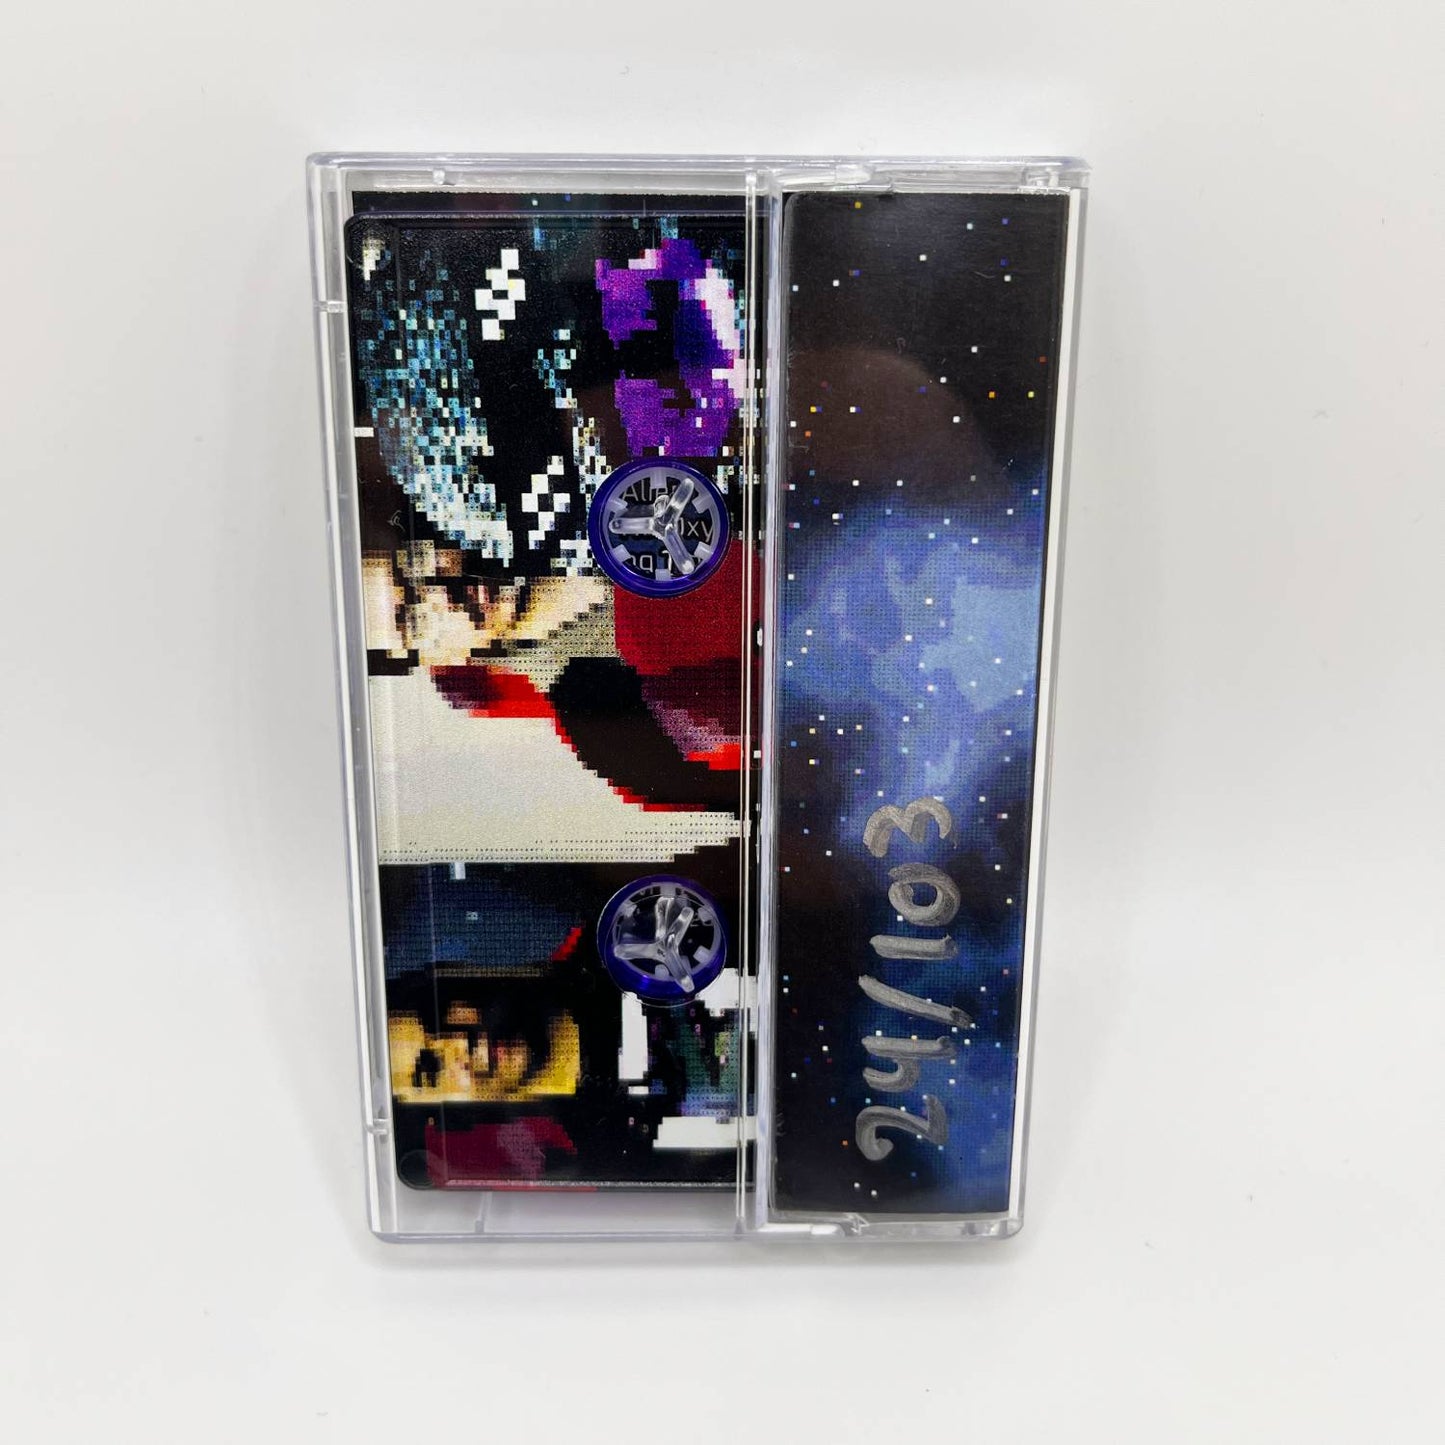 Groovy Kaiju - Groovin' Through the Galaxy (Album)